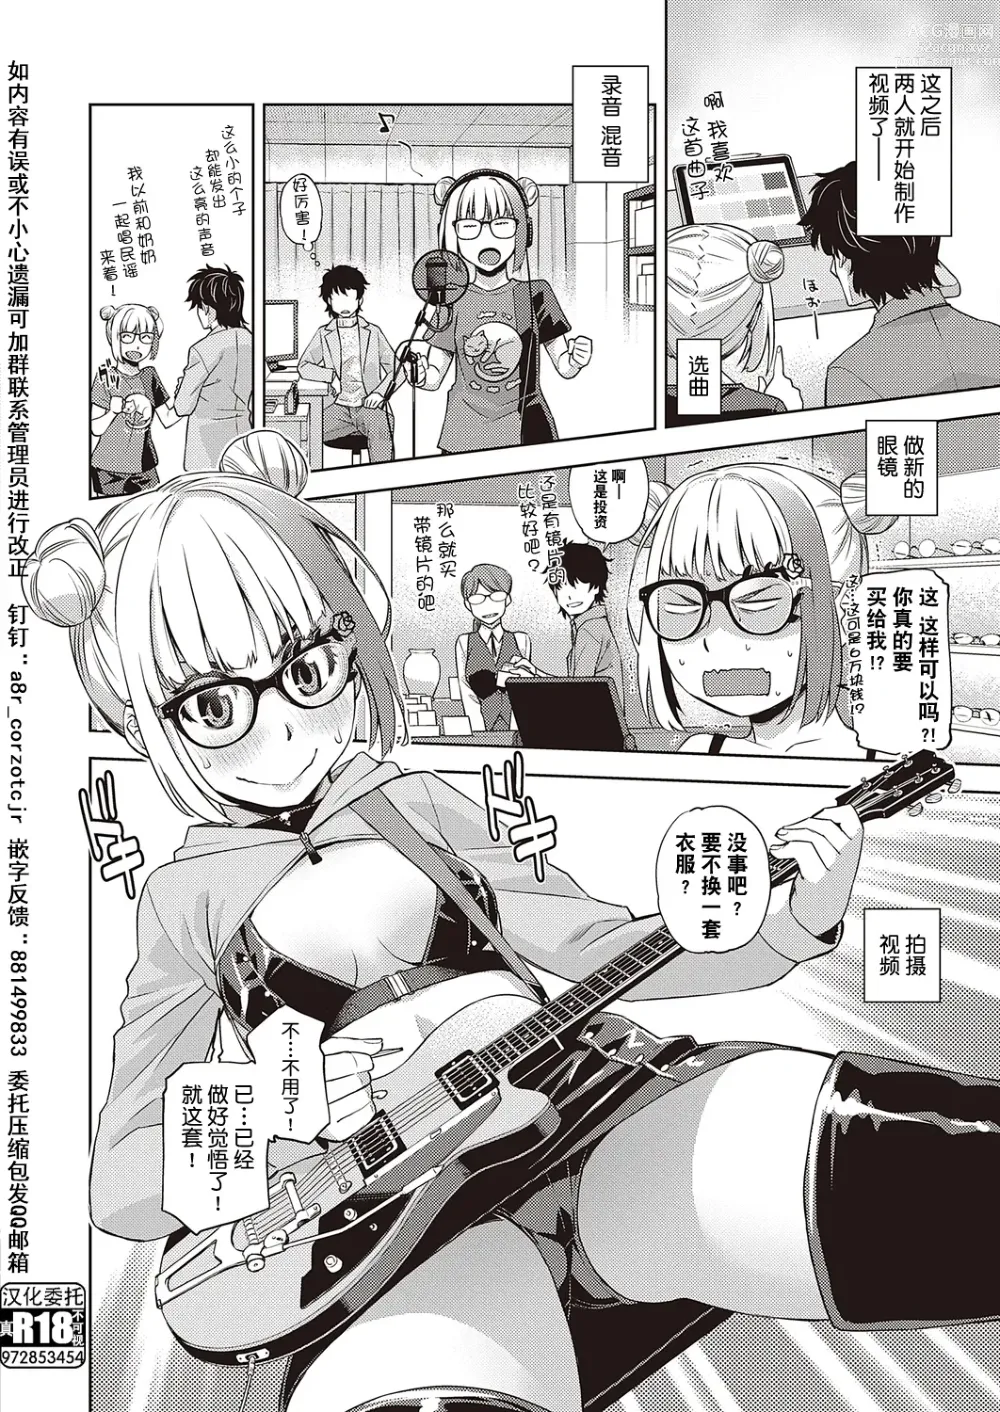 Page 4 of manga Houkago Megane Club